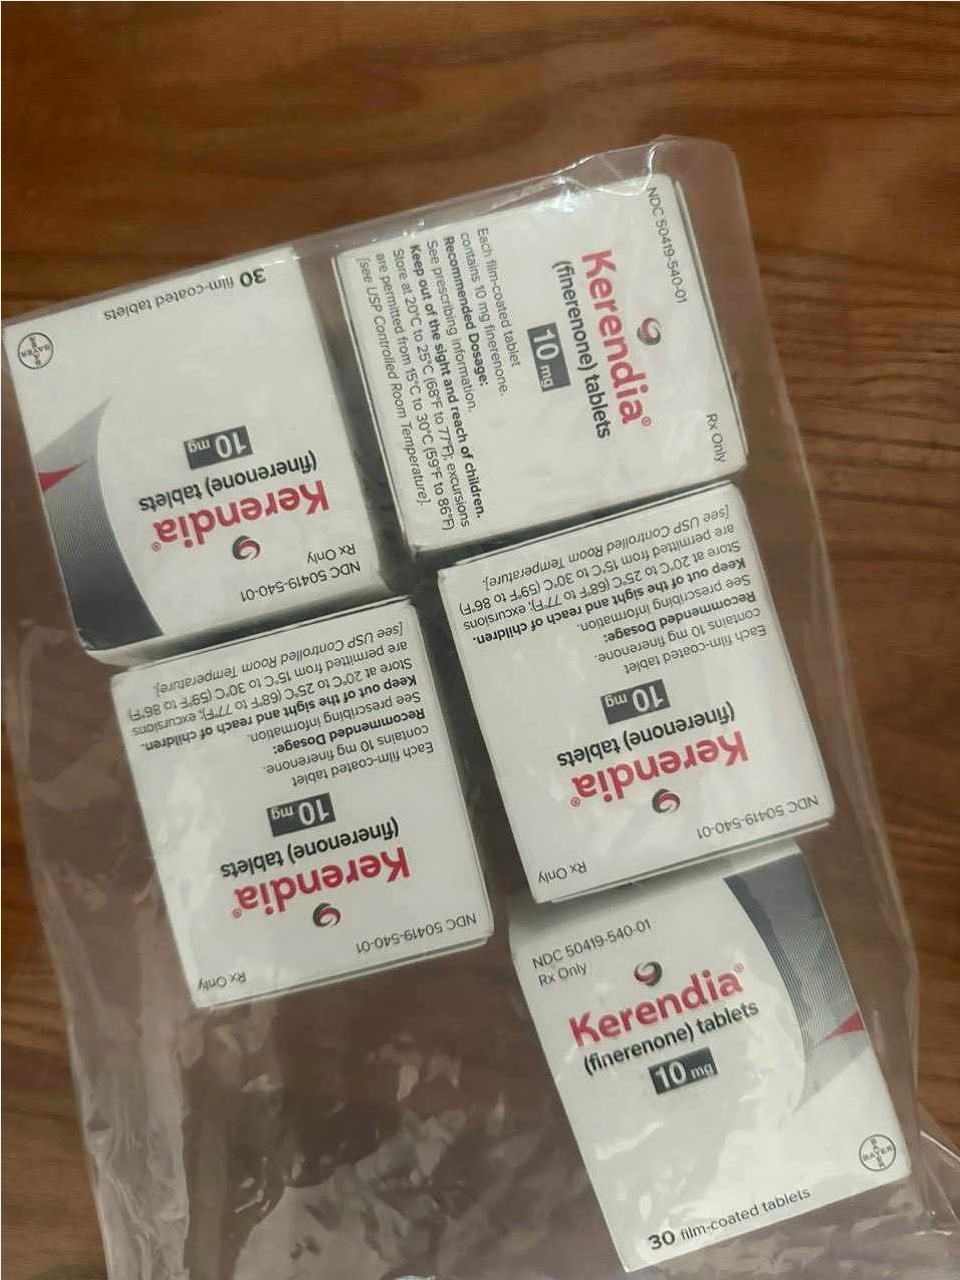 Thuốc Kerendia Finerenone 10mg giá bao nhiêu mua ở đâu?